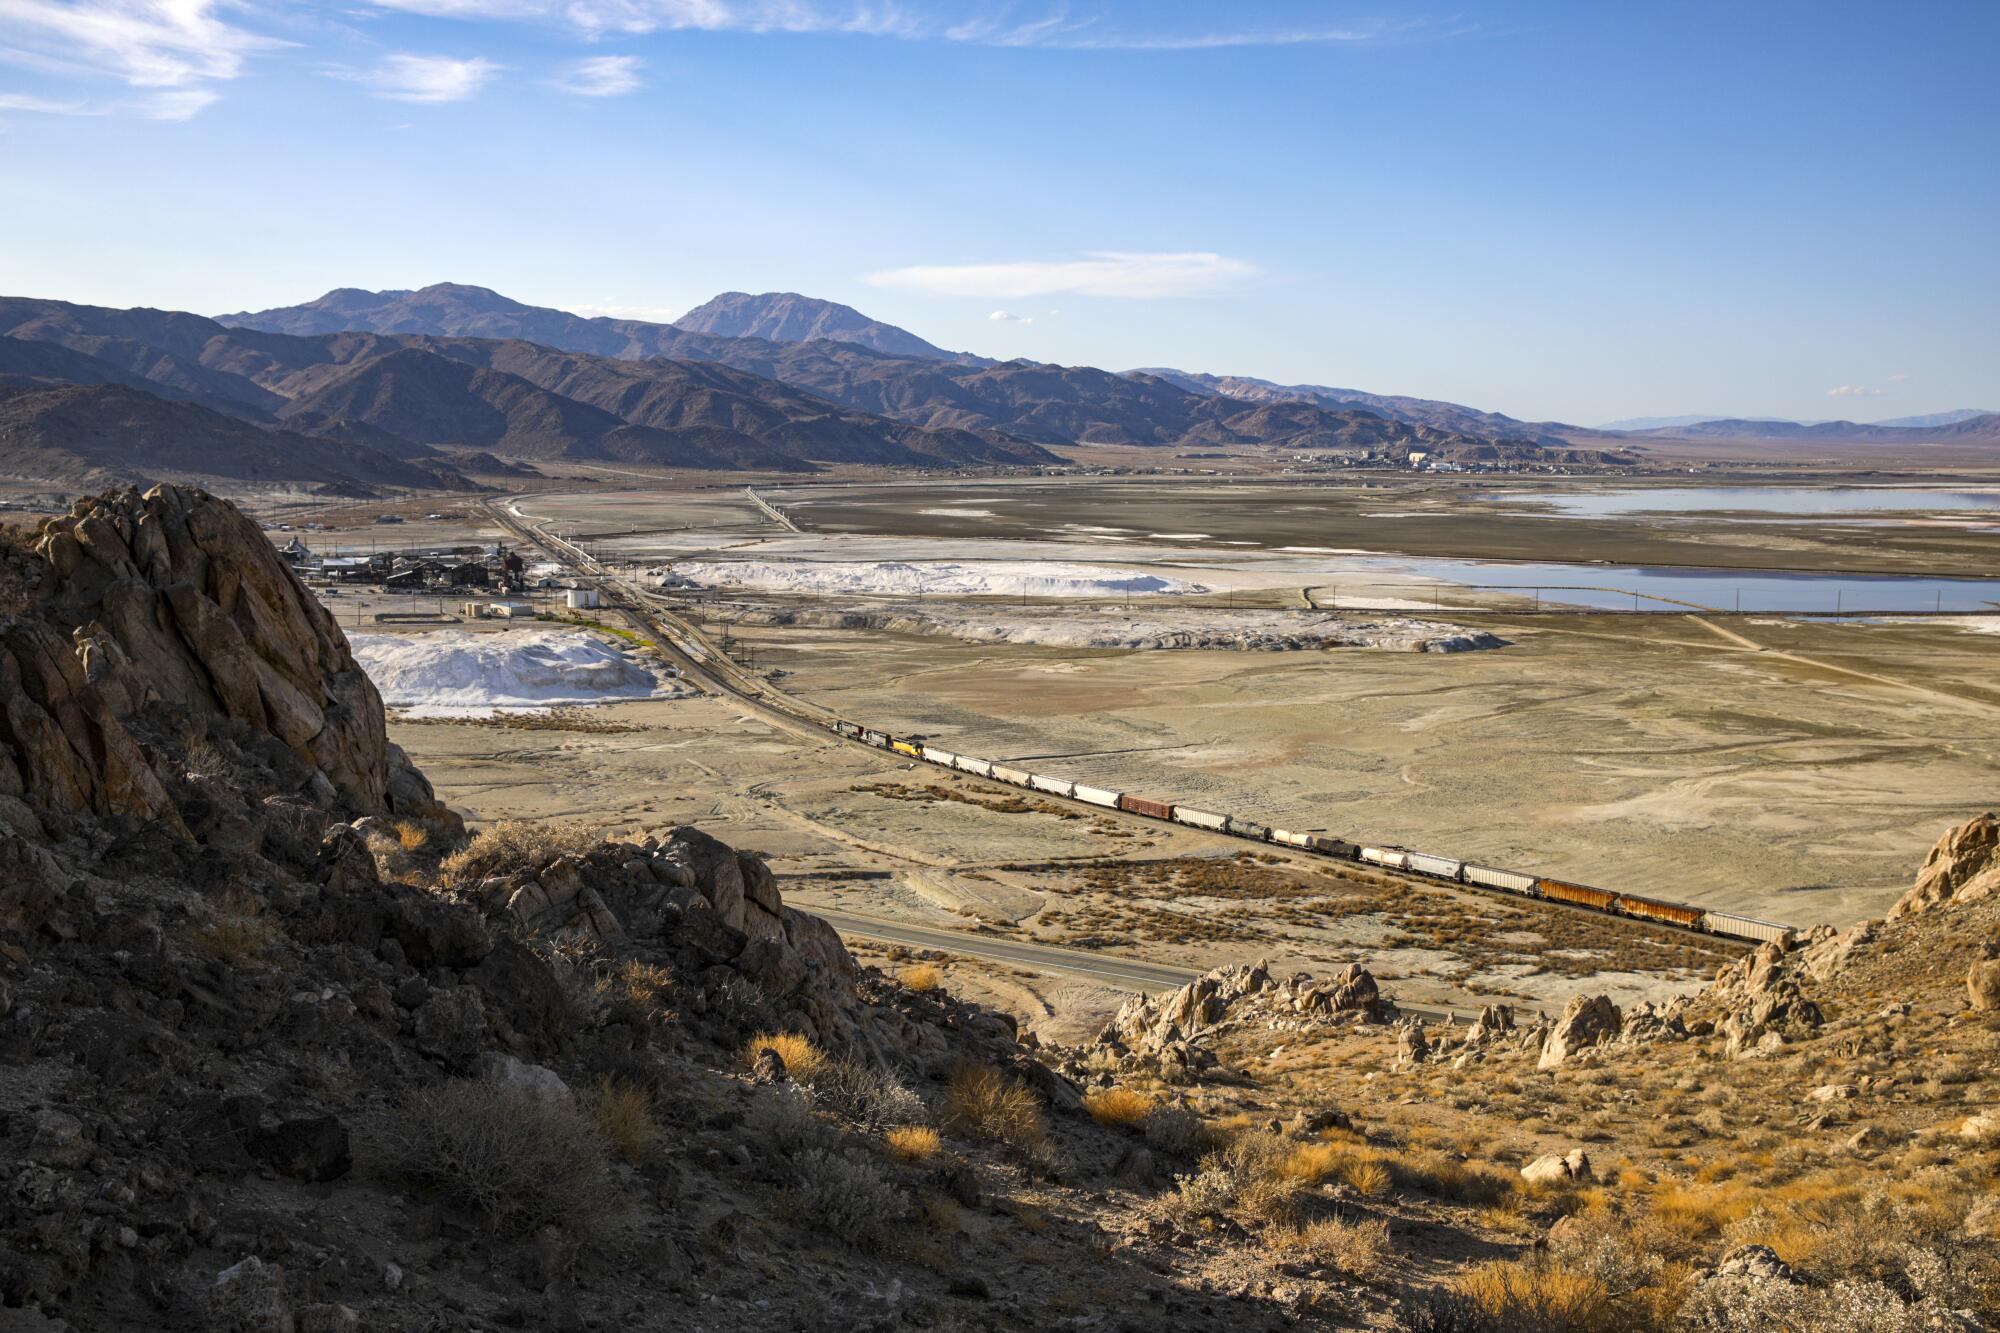 A freight train in a desert valley, viewed from a hillside